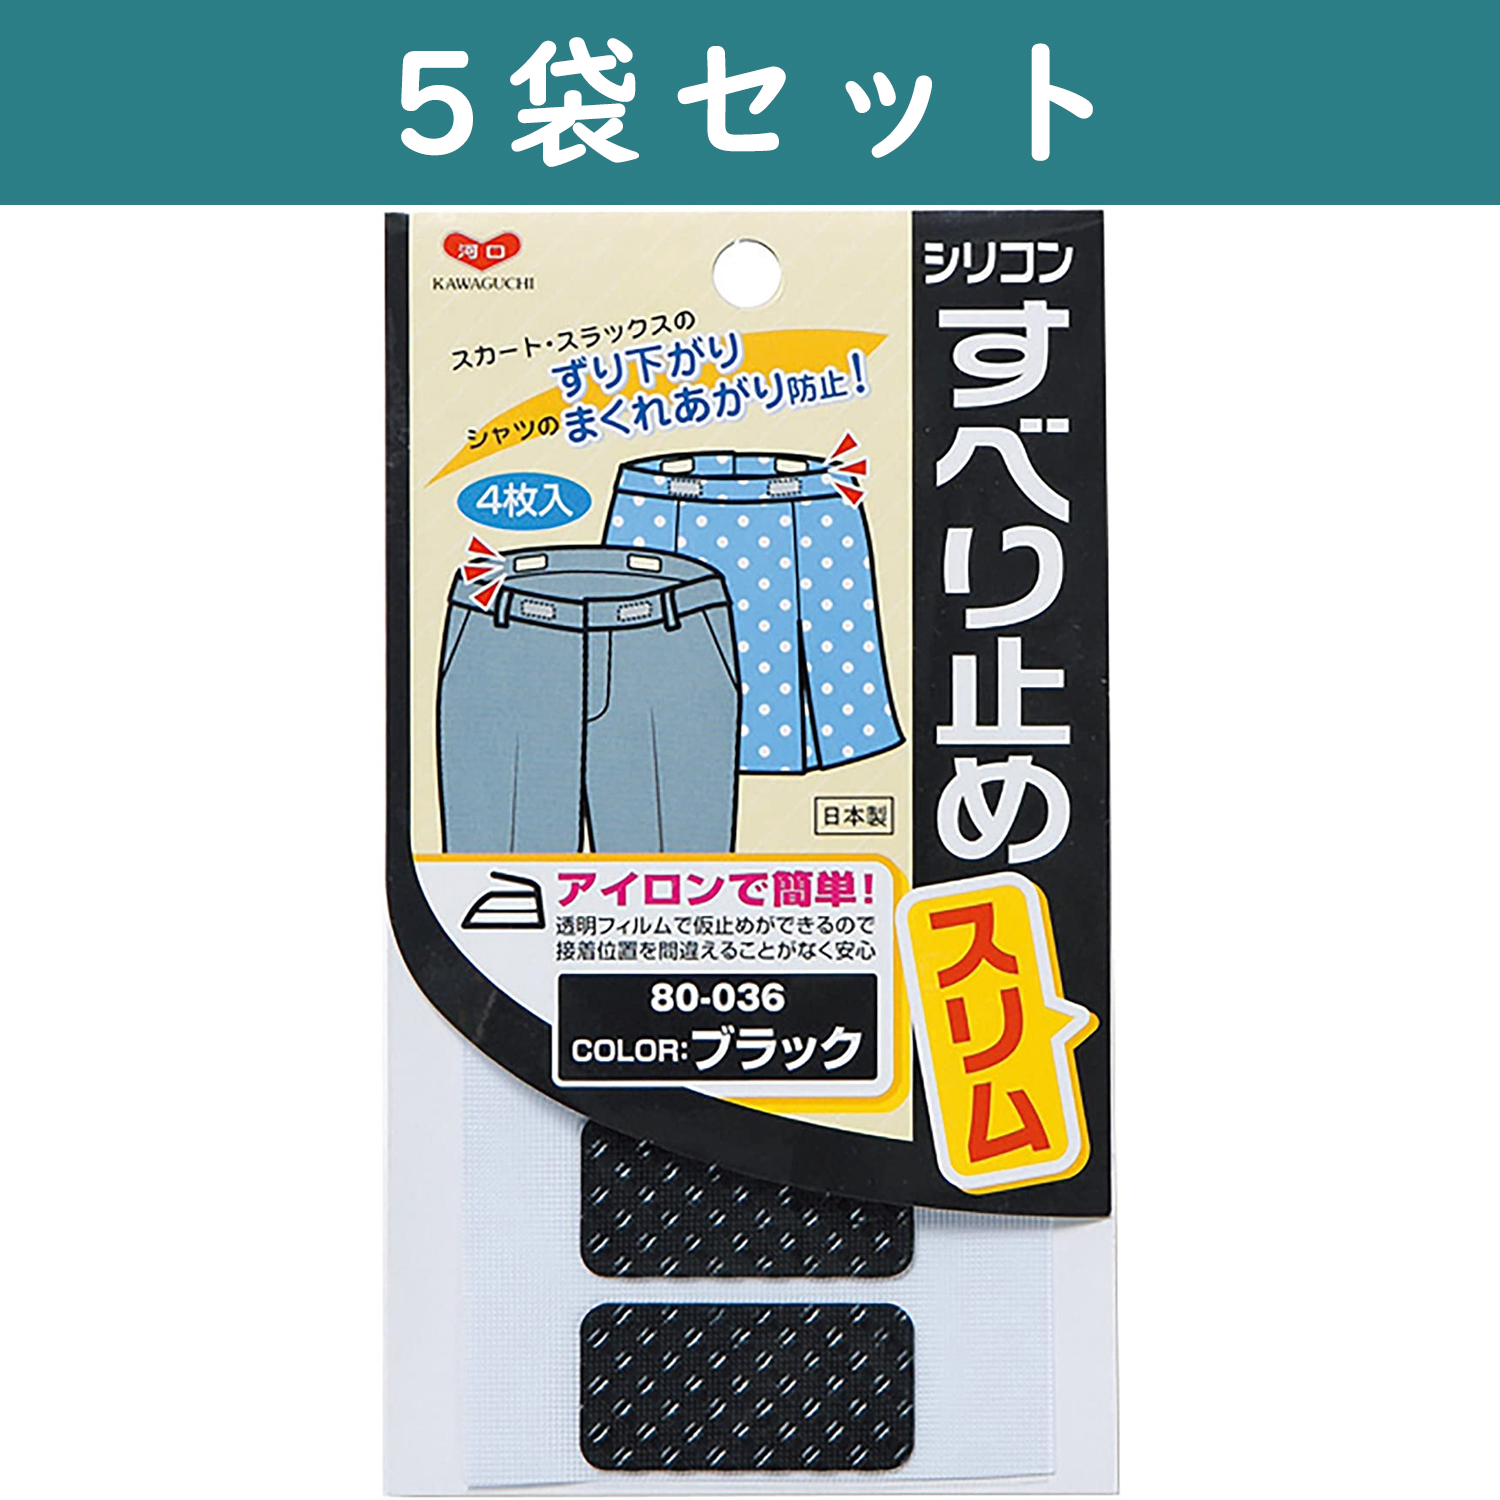 TK80036-5 KAWAGUCHI Anti-Slip Slim Thermal Adhesive Type Black 5 Bag Set (Set)